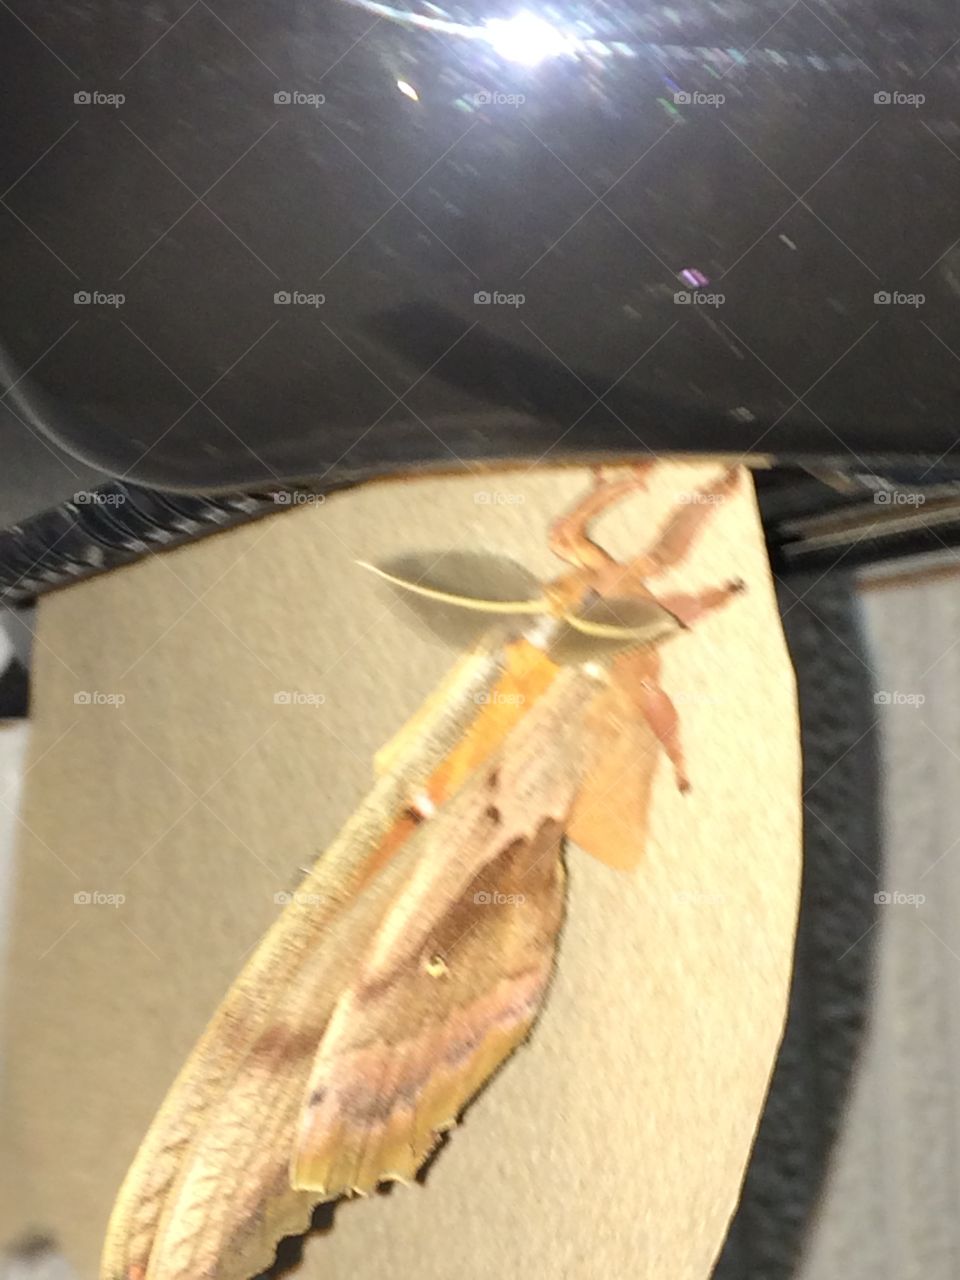 Moth on paper towel 